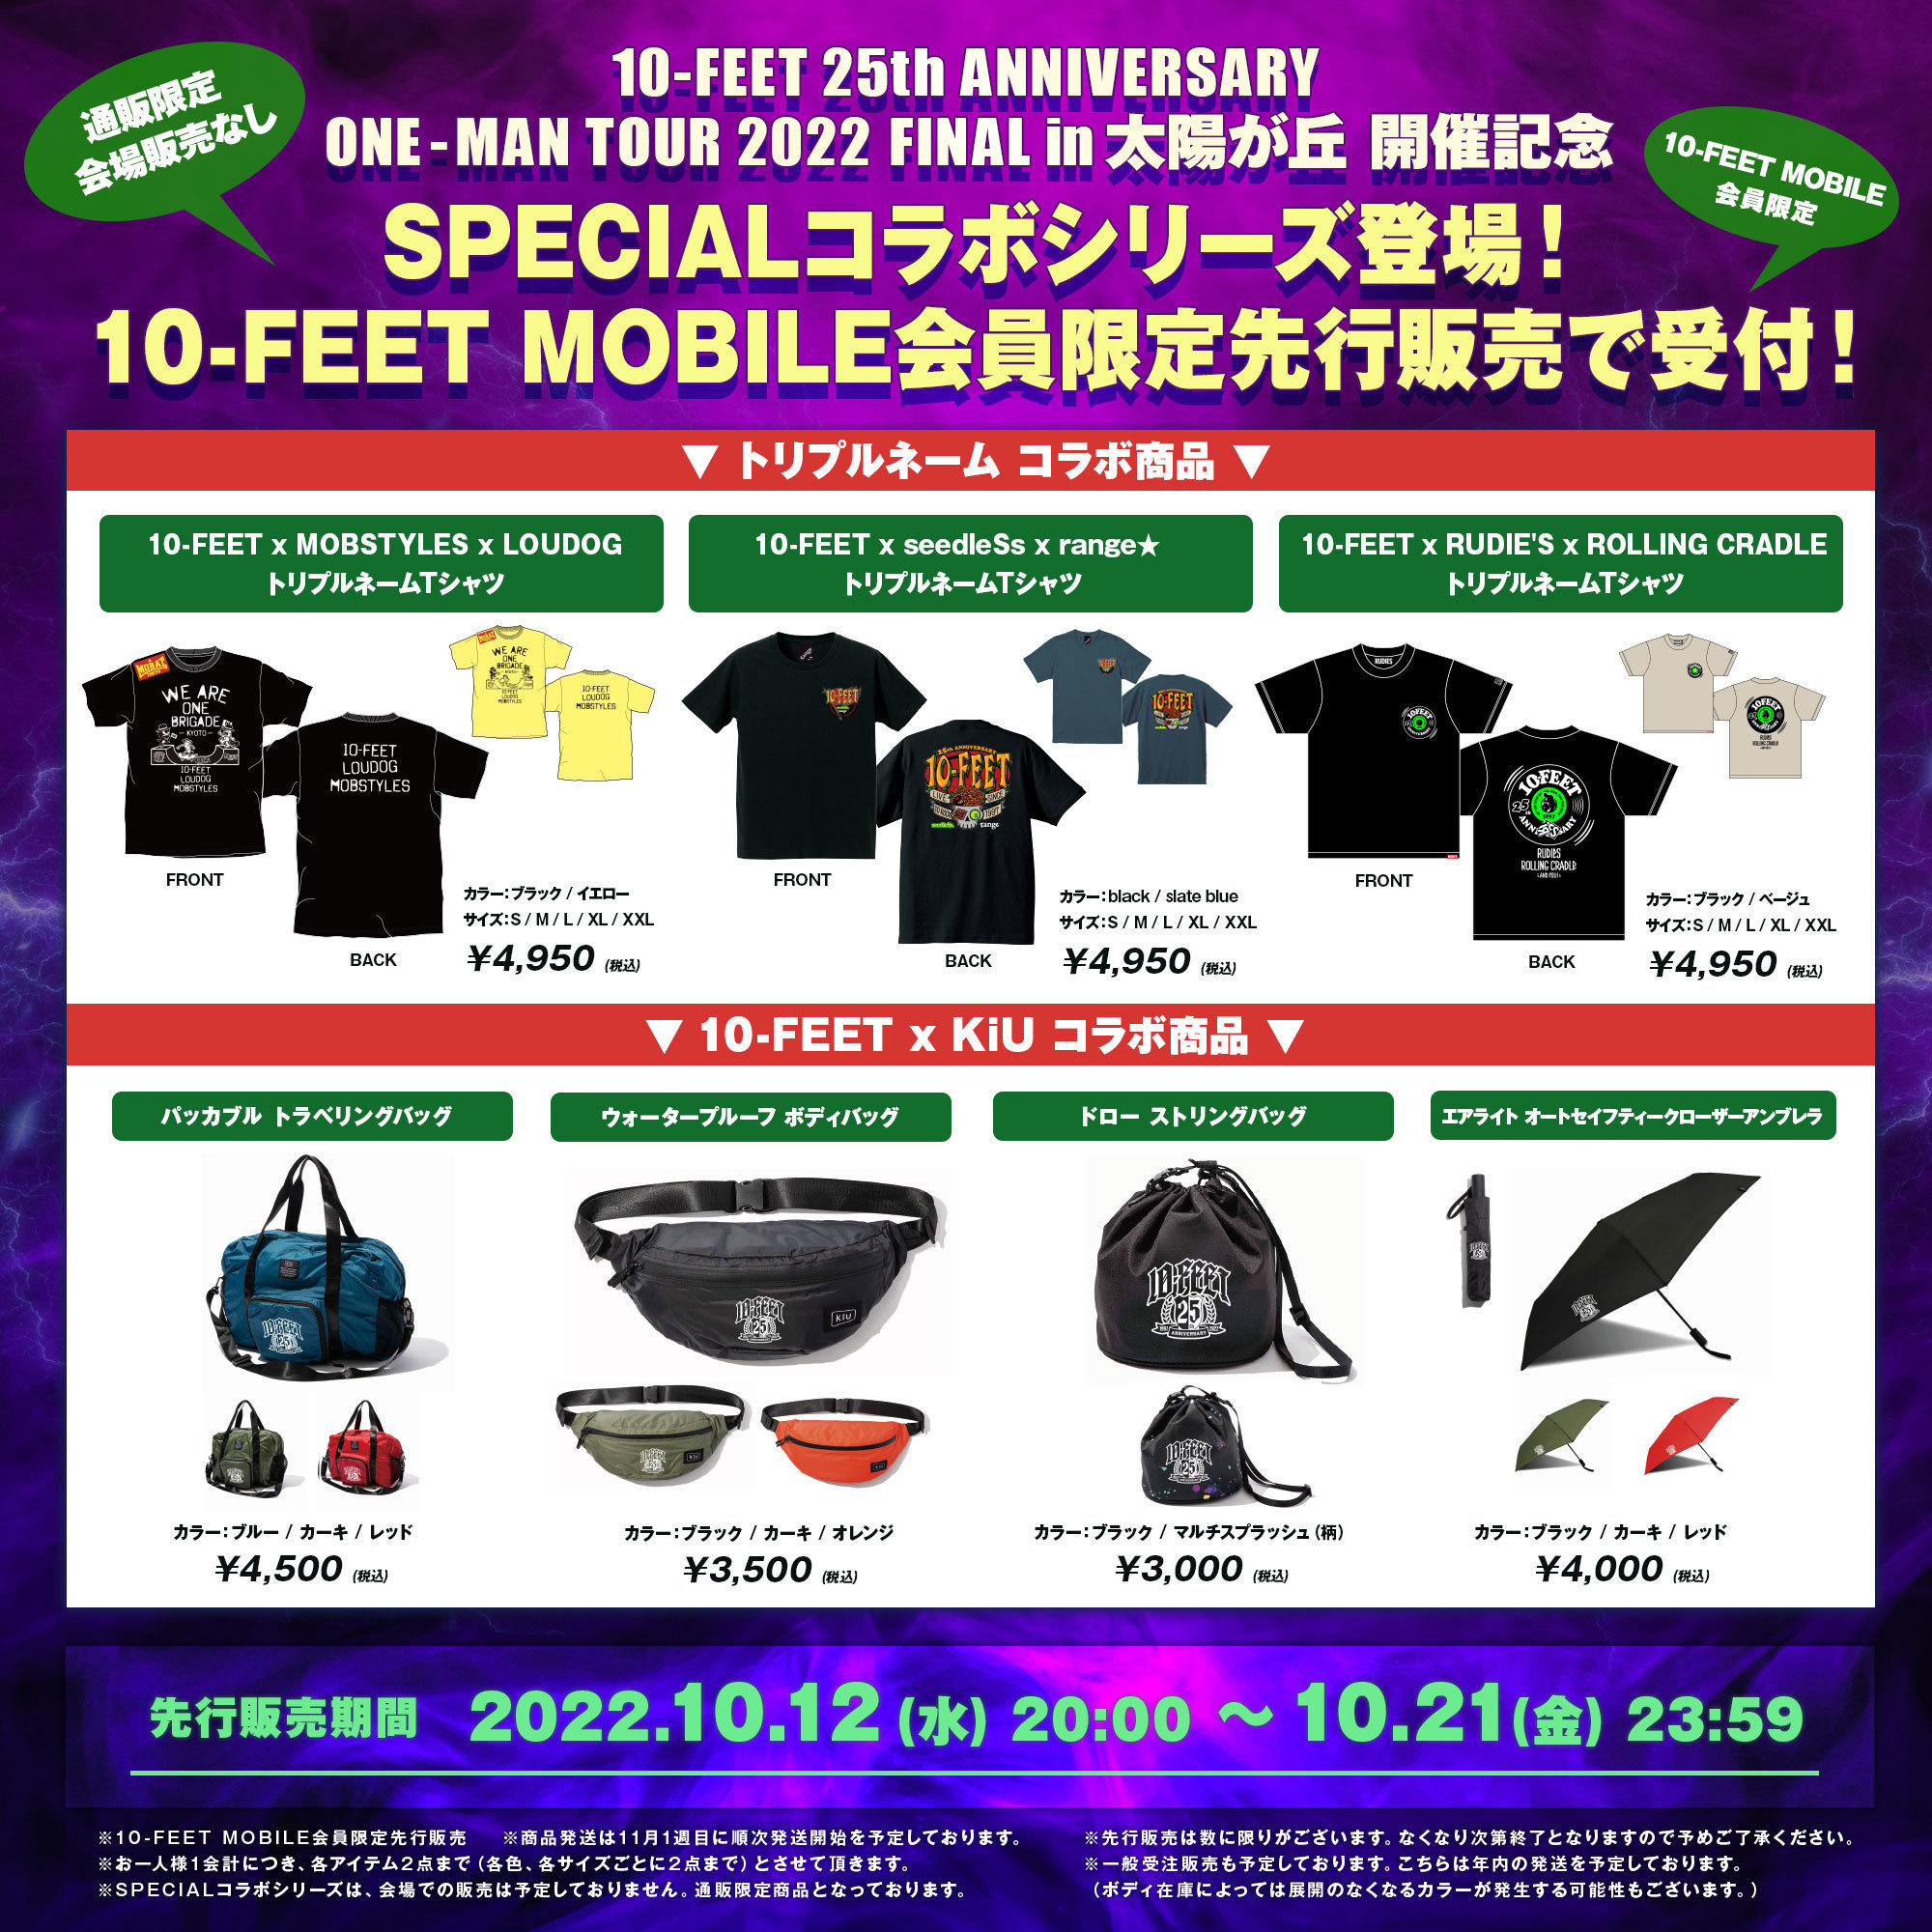 10-FEET 25th ANNIVERSARY ONE-MAN TOUR 2022 FINAL in 太陽が丘 開催 